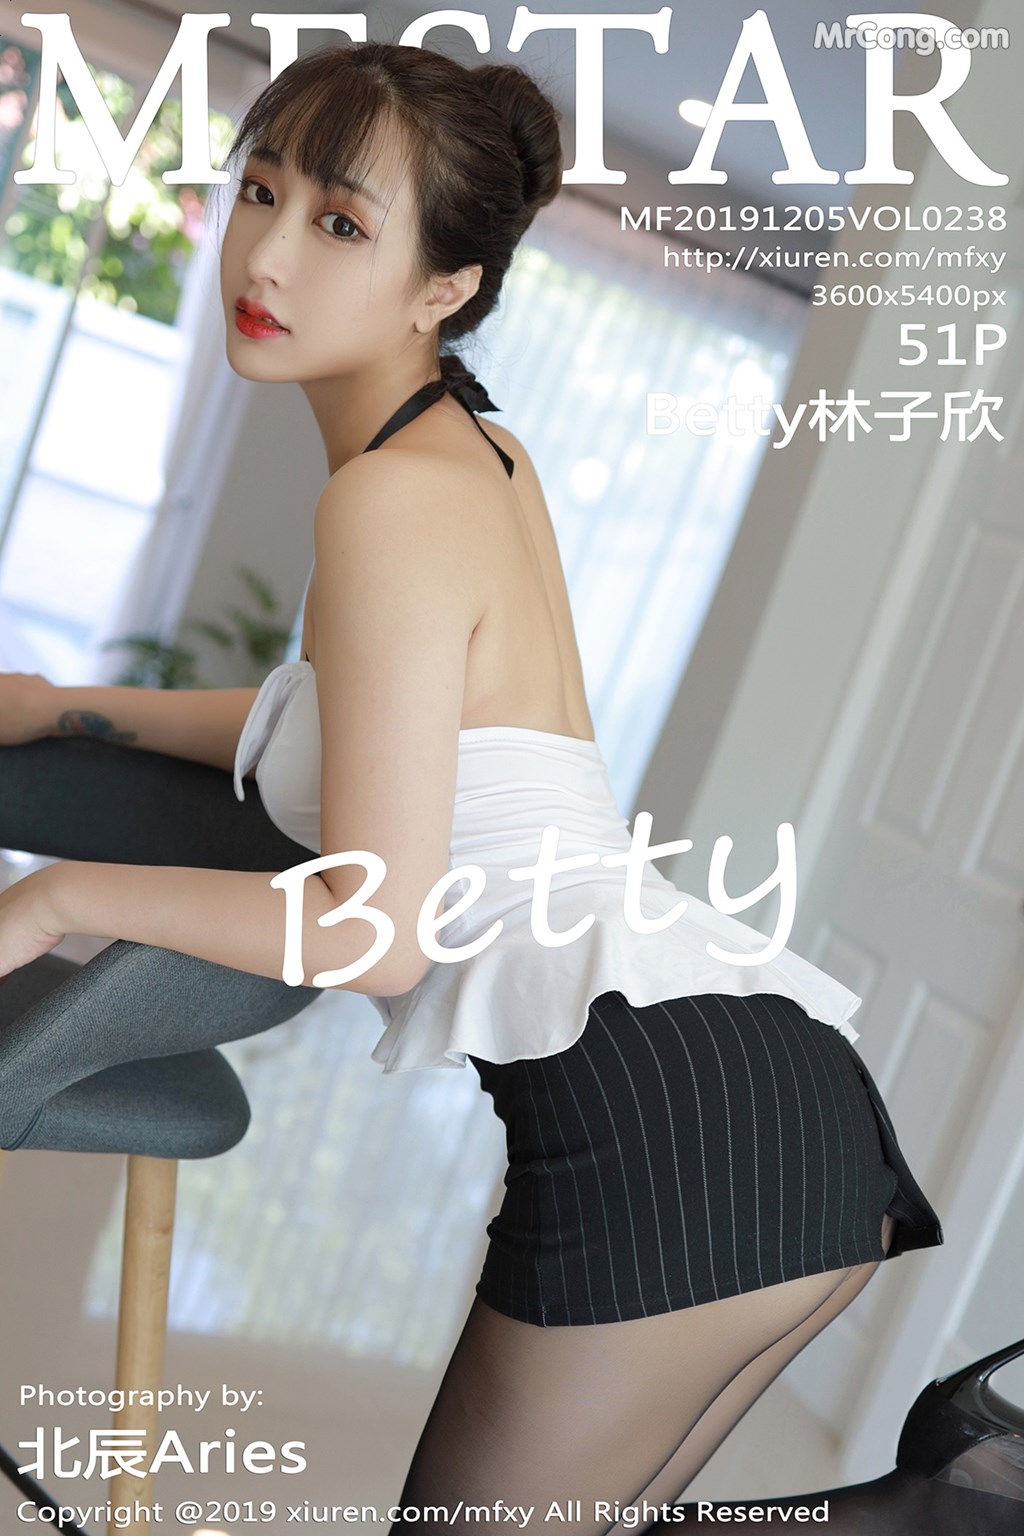 MFStar Vol. 238: Betty 林子欣 (52 photos) photo 1-0